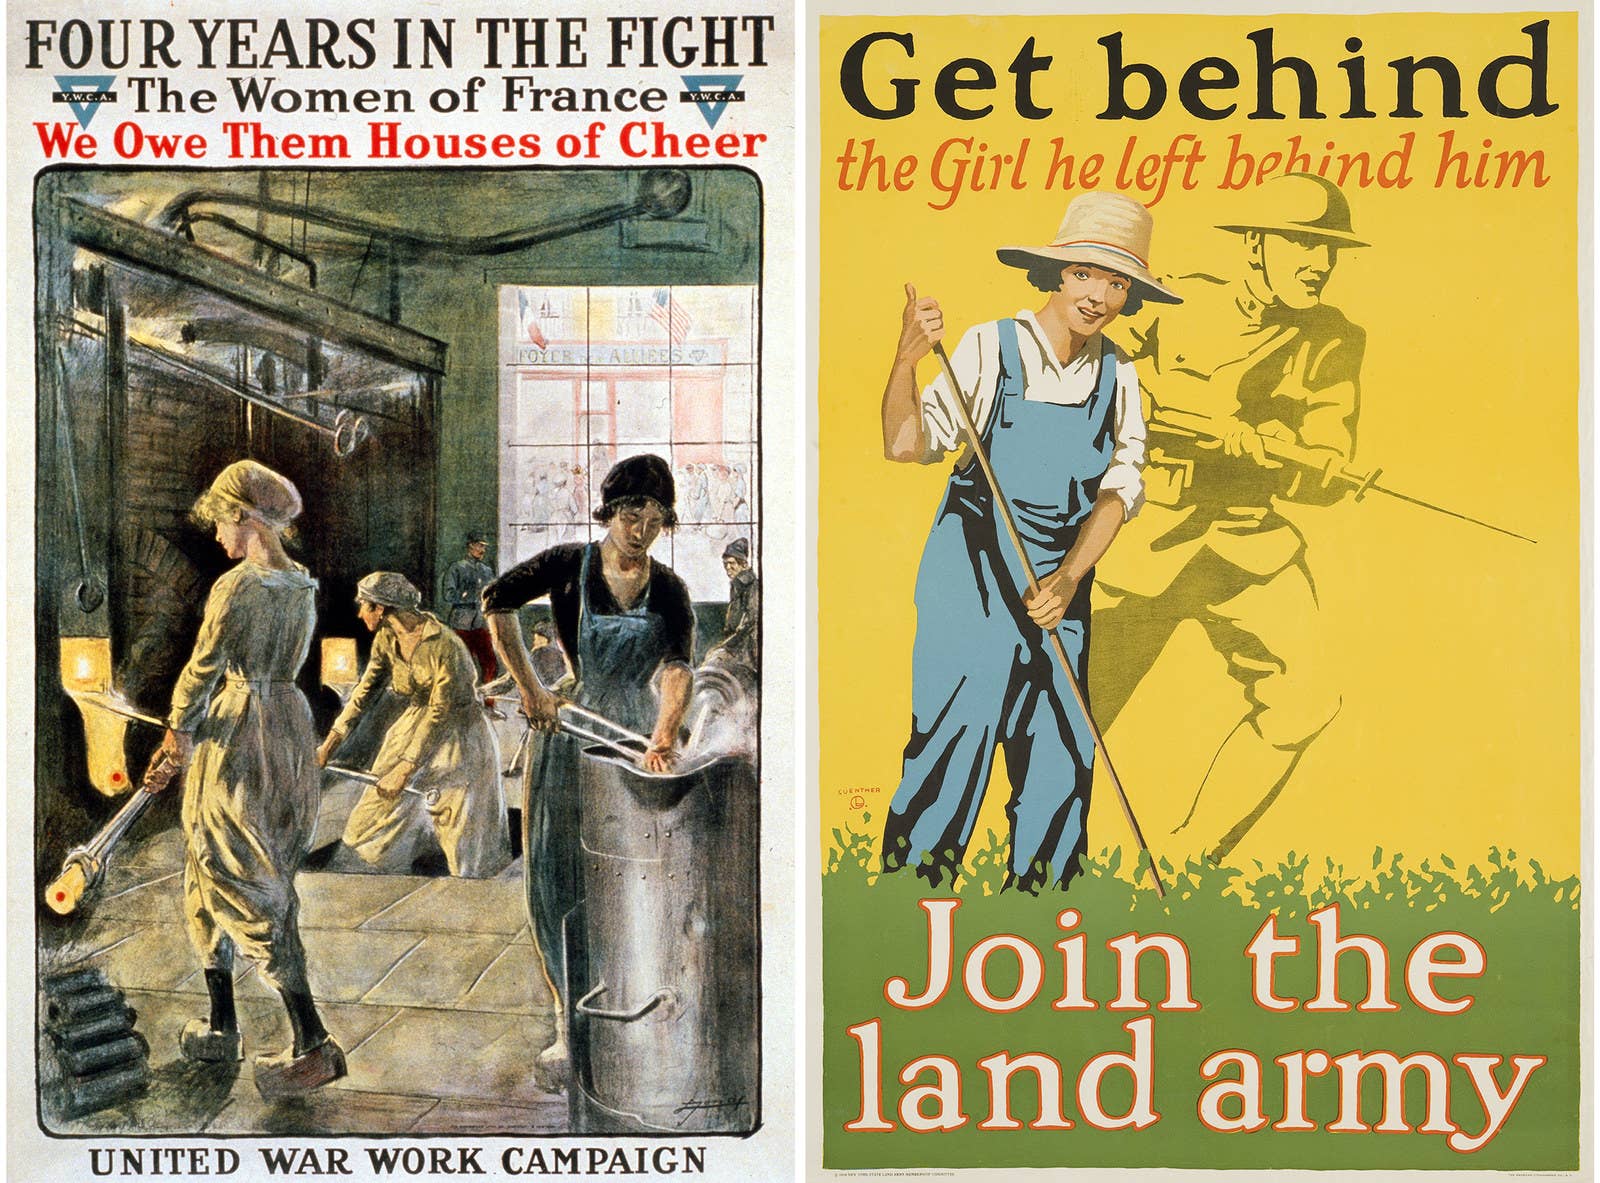 Posters encouraging women to join in the war effort, 1918.